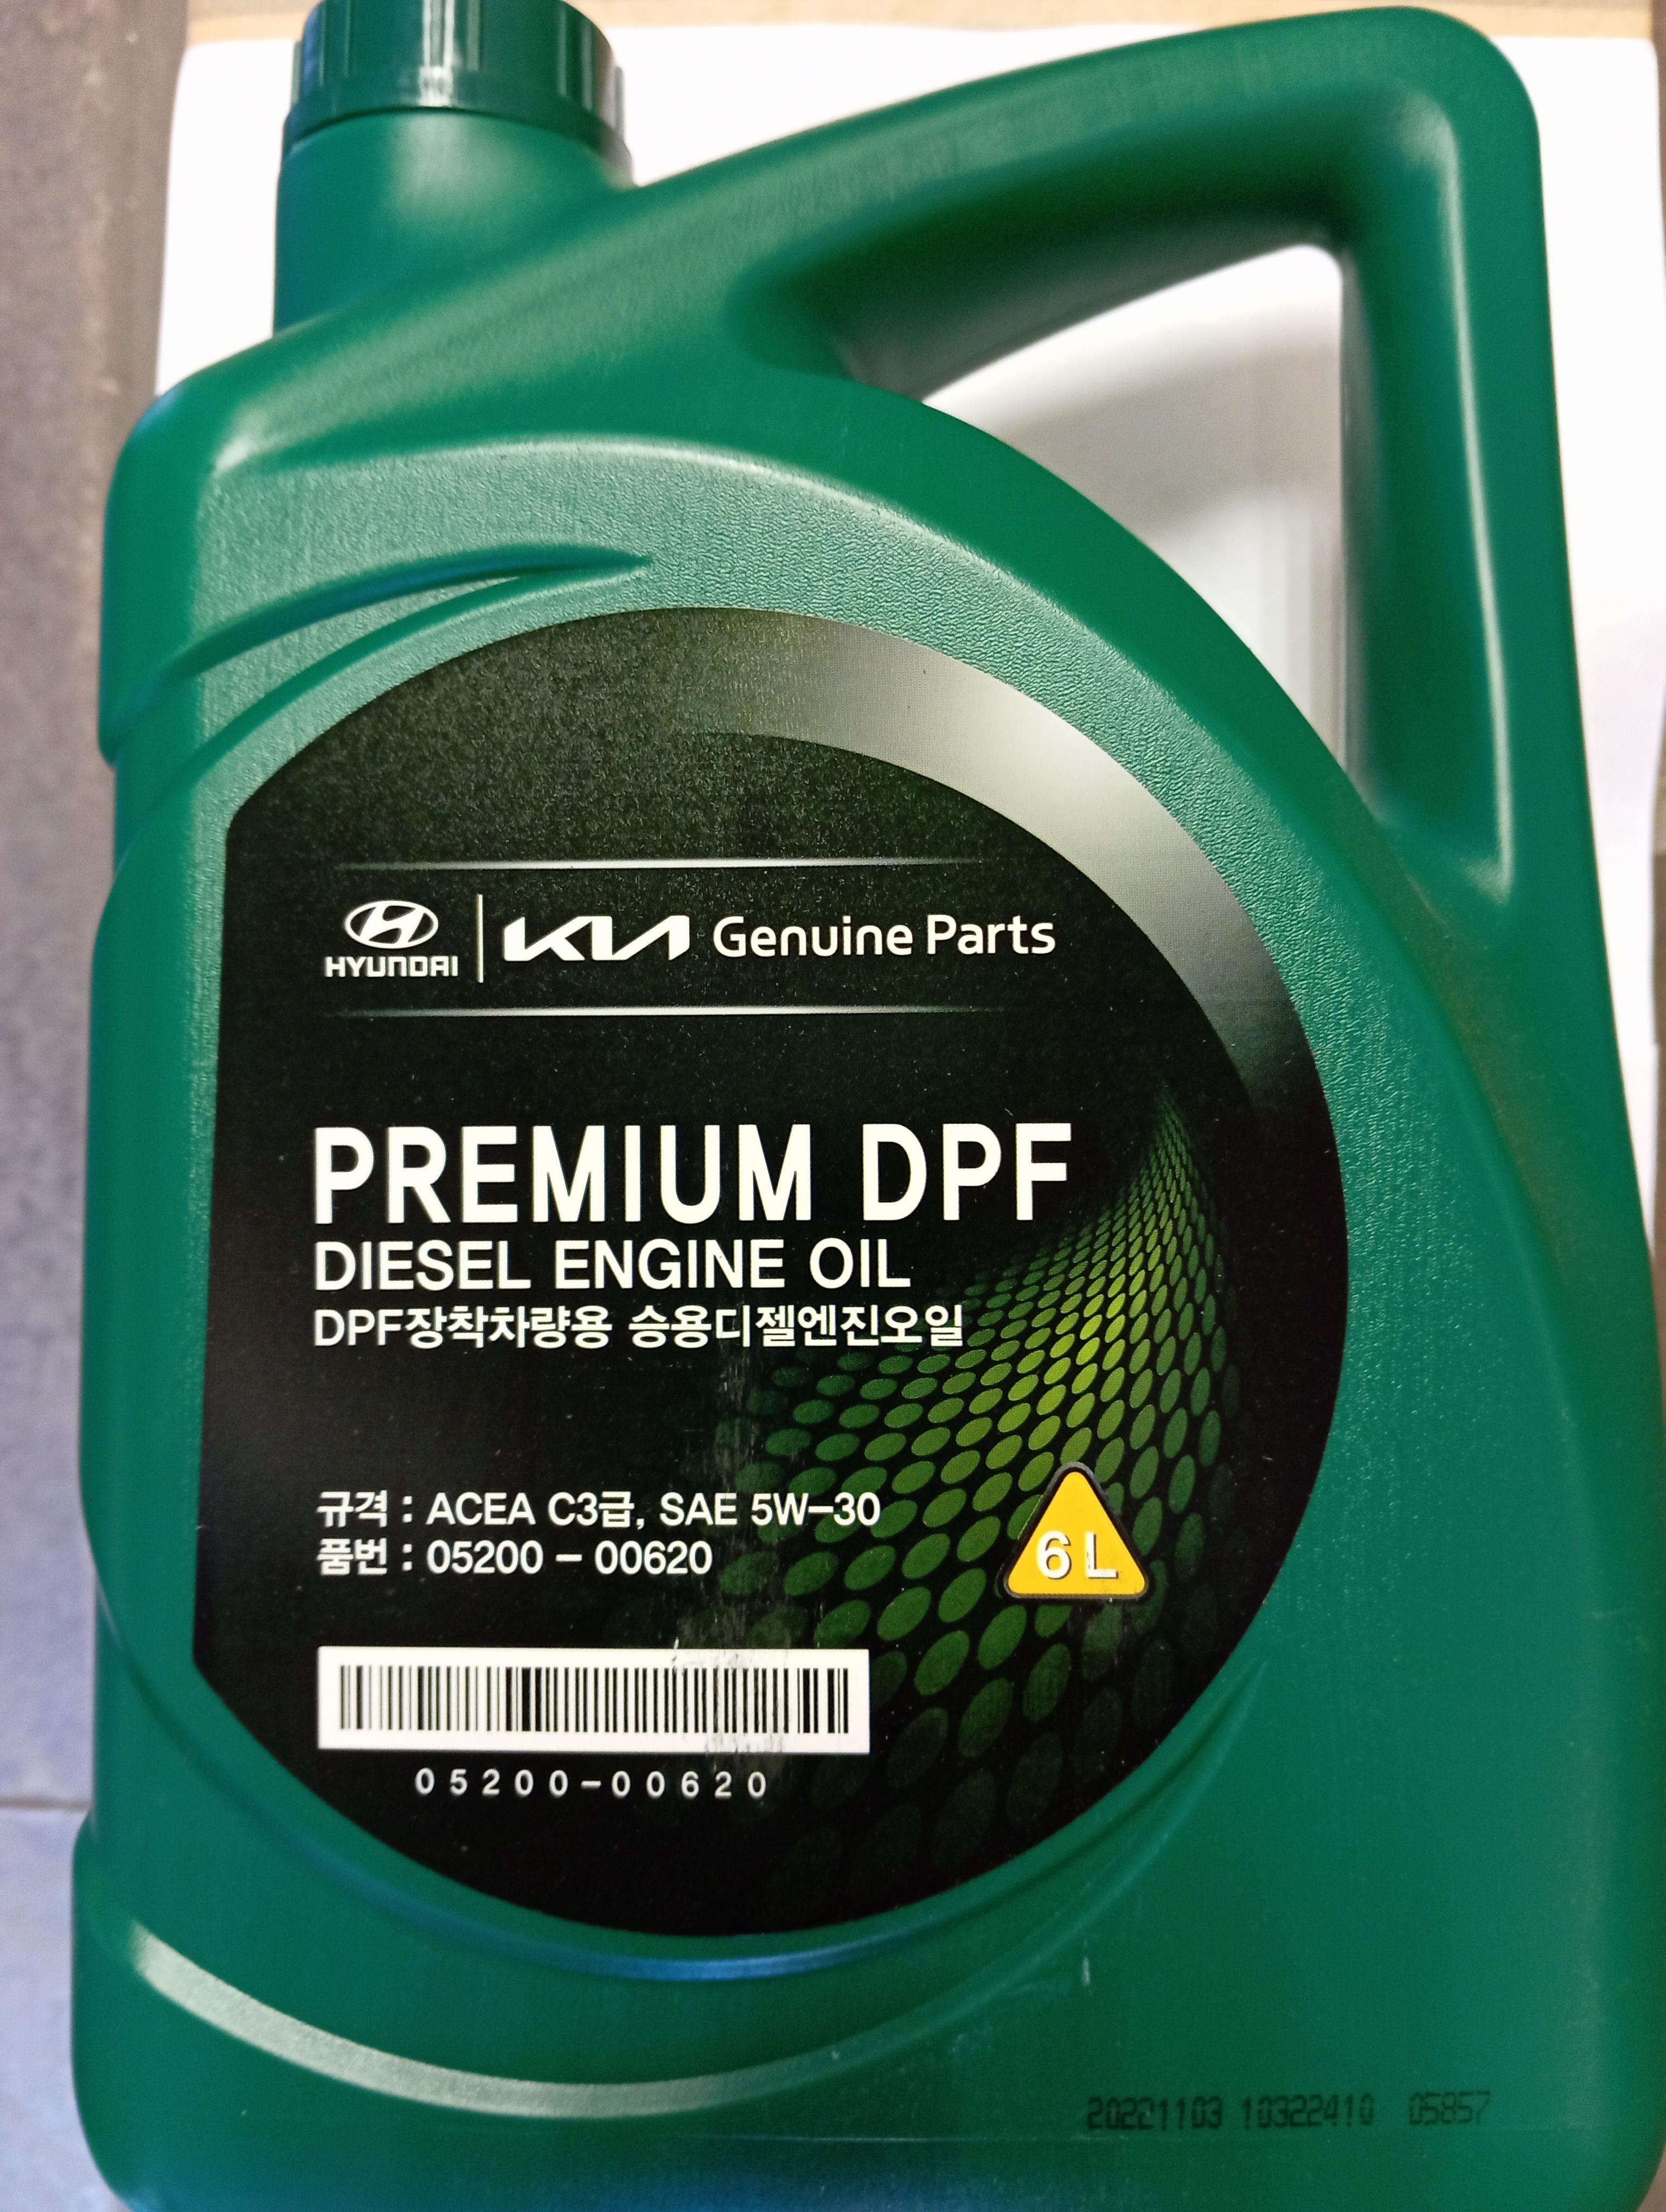 PREMIUM DPF DIESEL ENGINE OIL  5W-30 6 литров